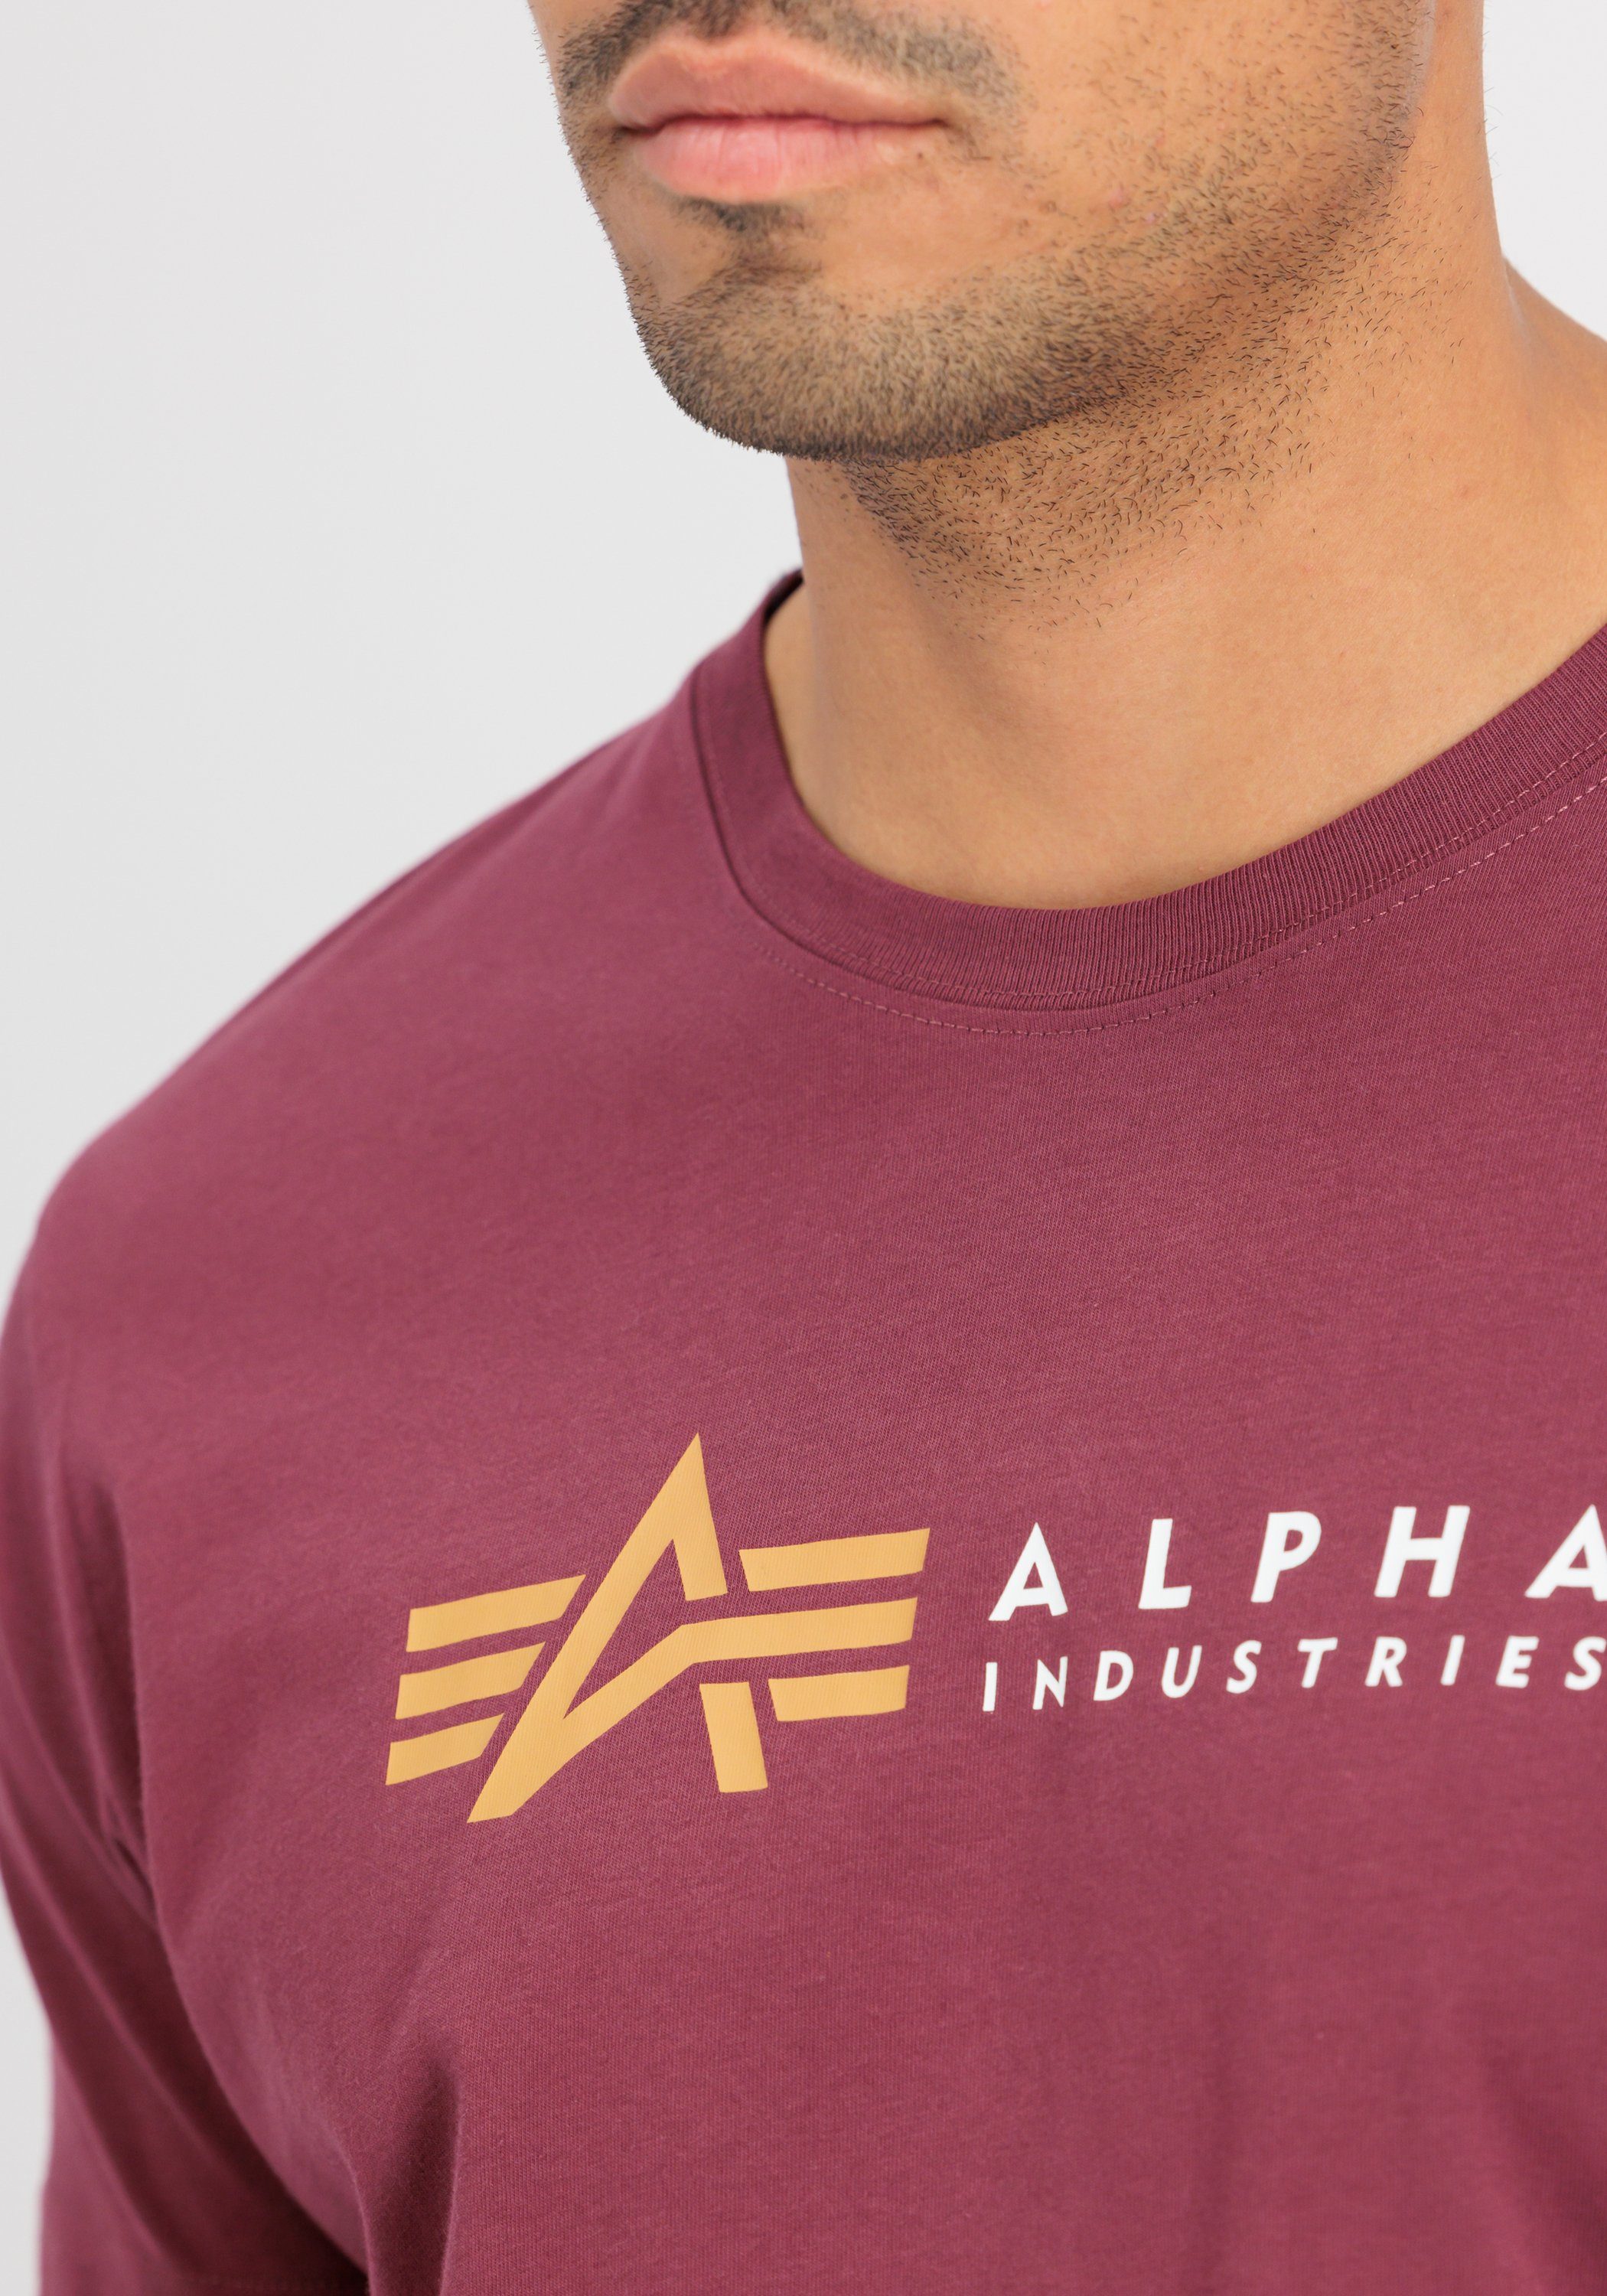 Alpha Industries T-Shirt Alpha Men burgundy - T Alpha T-Shirts Label Industries